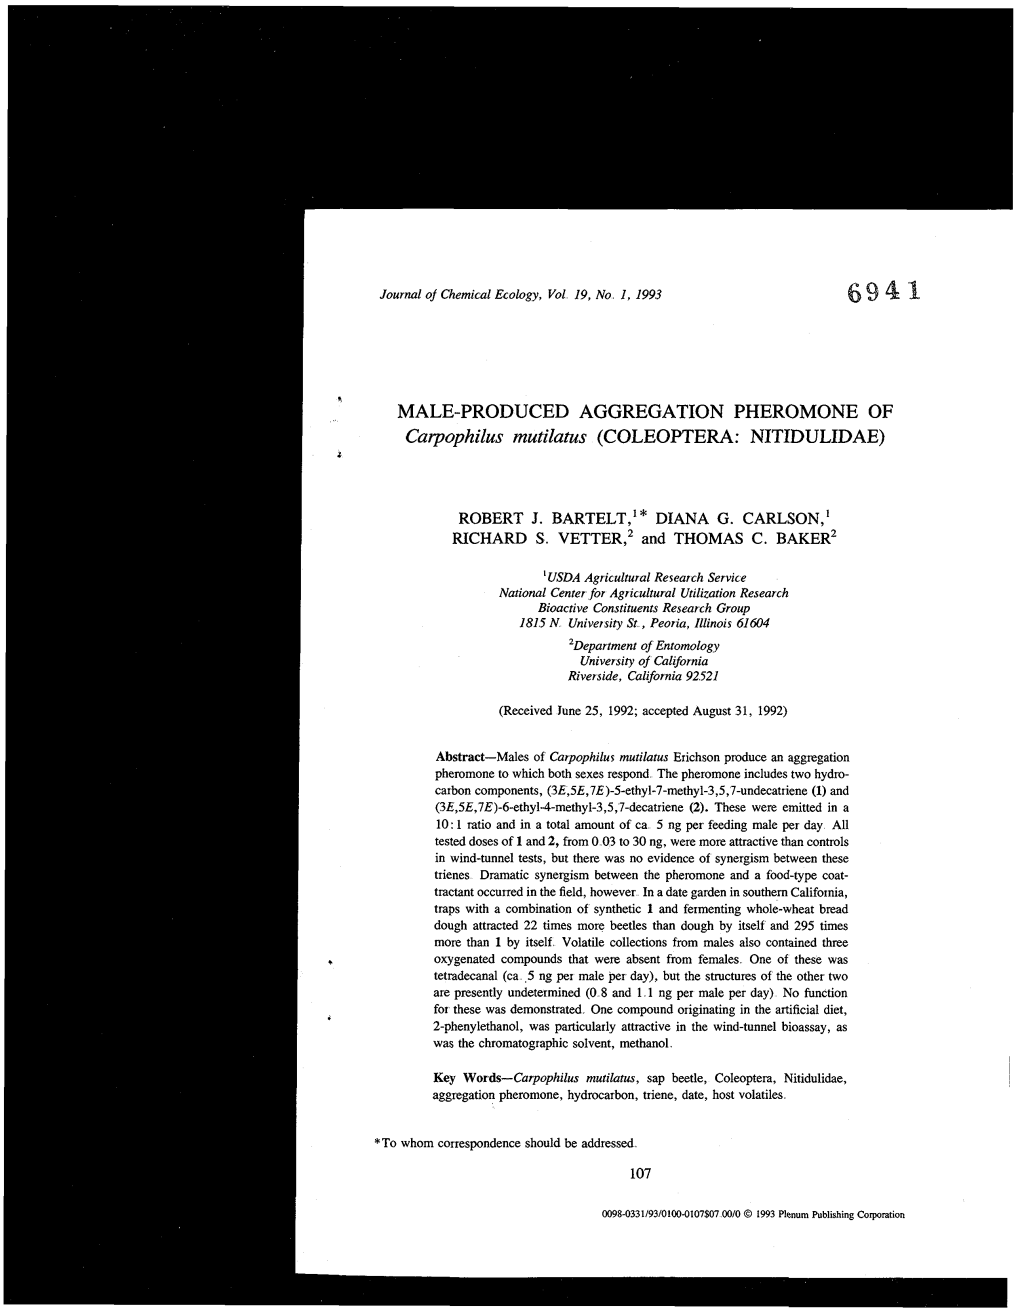 MALE-PRODUCED AGGREGATION PHEROMONE of Carpophilus Mutilatus (COLEOPTERA: NITIDULIDAE)